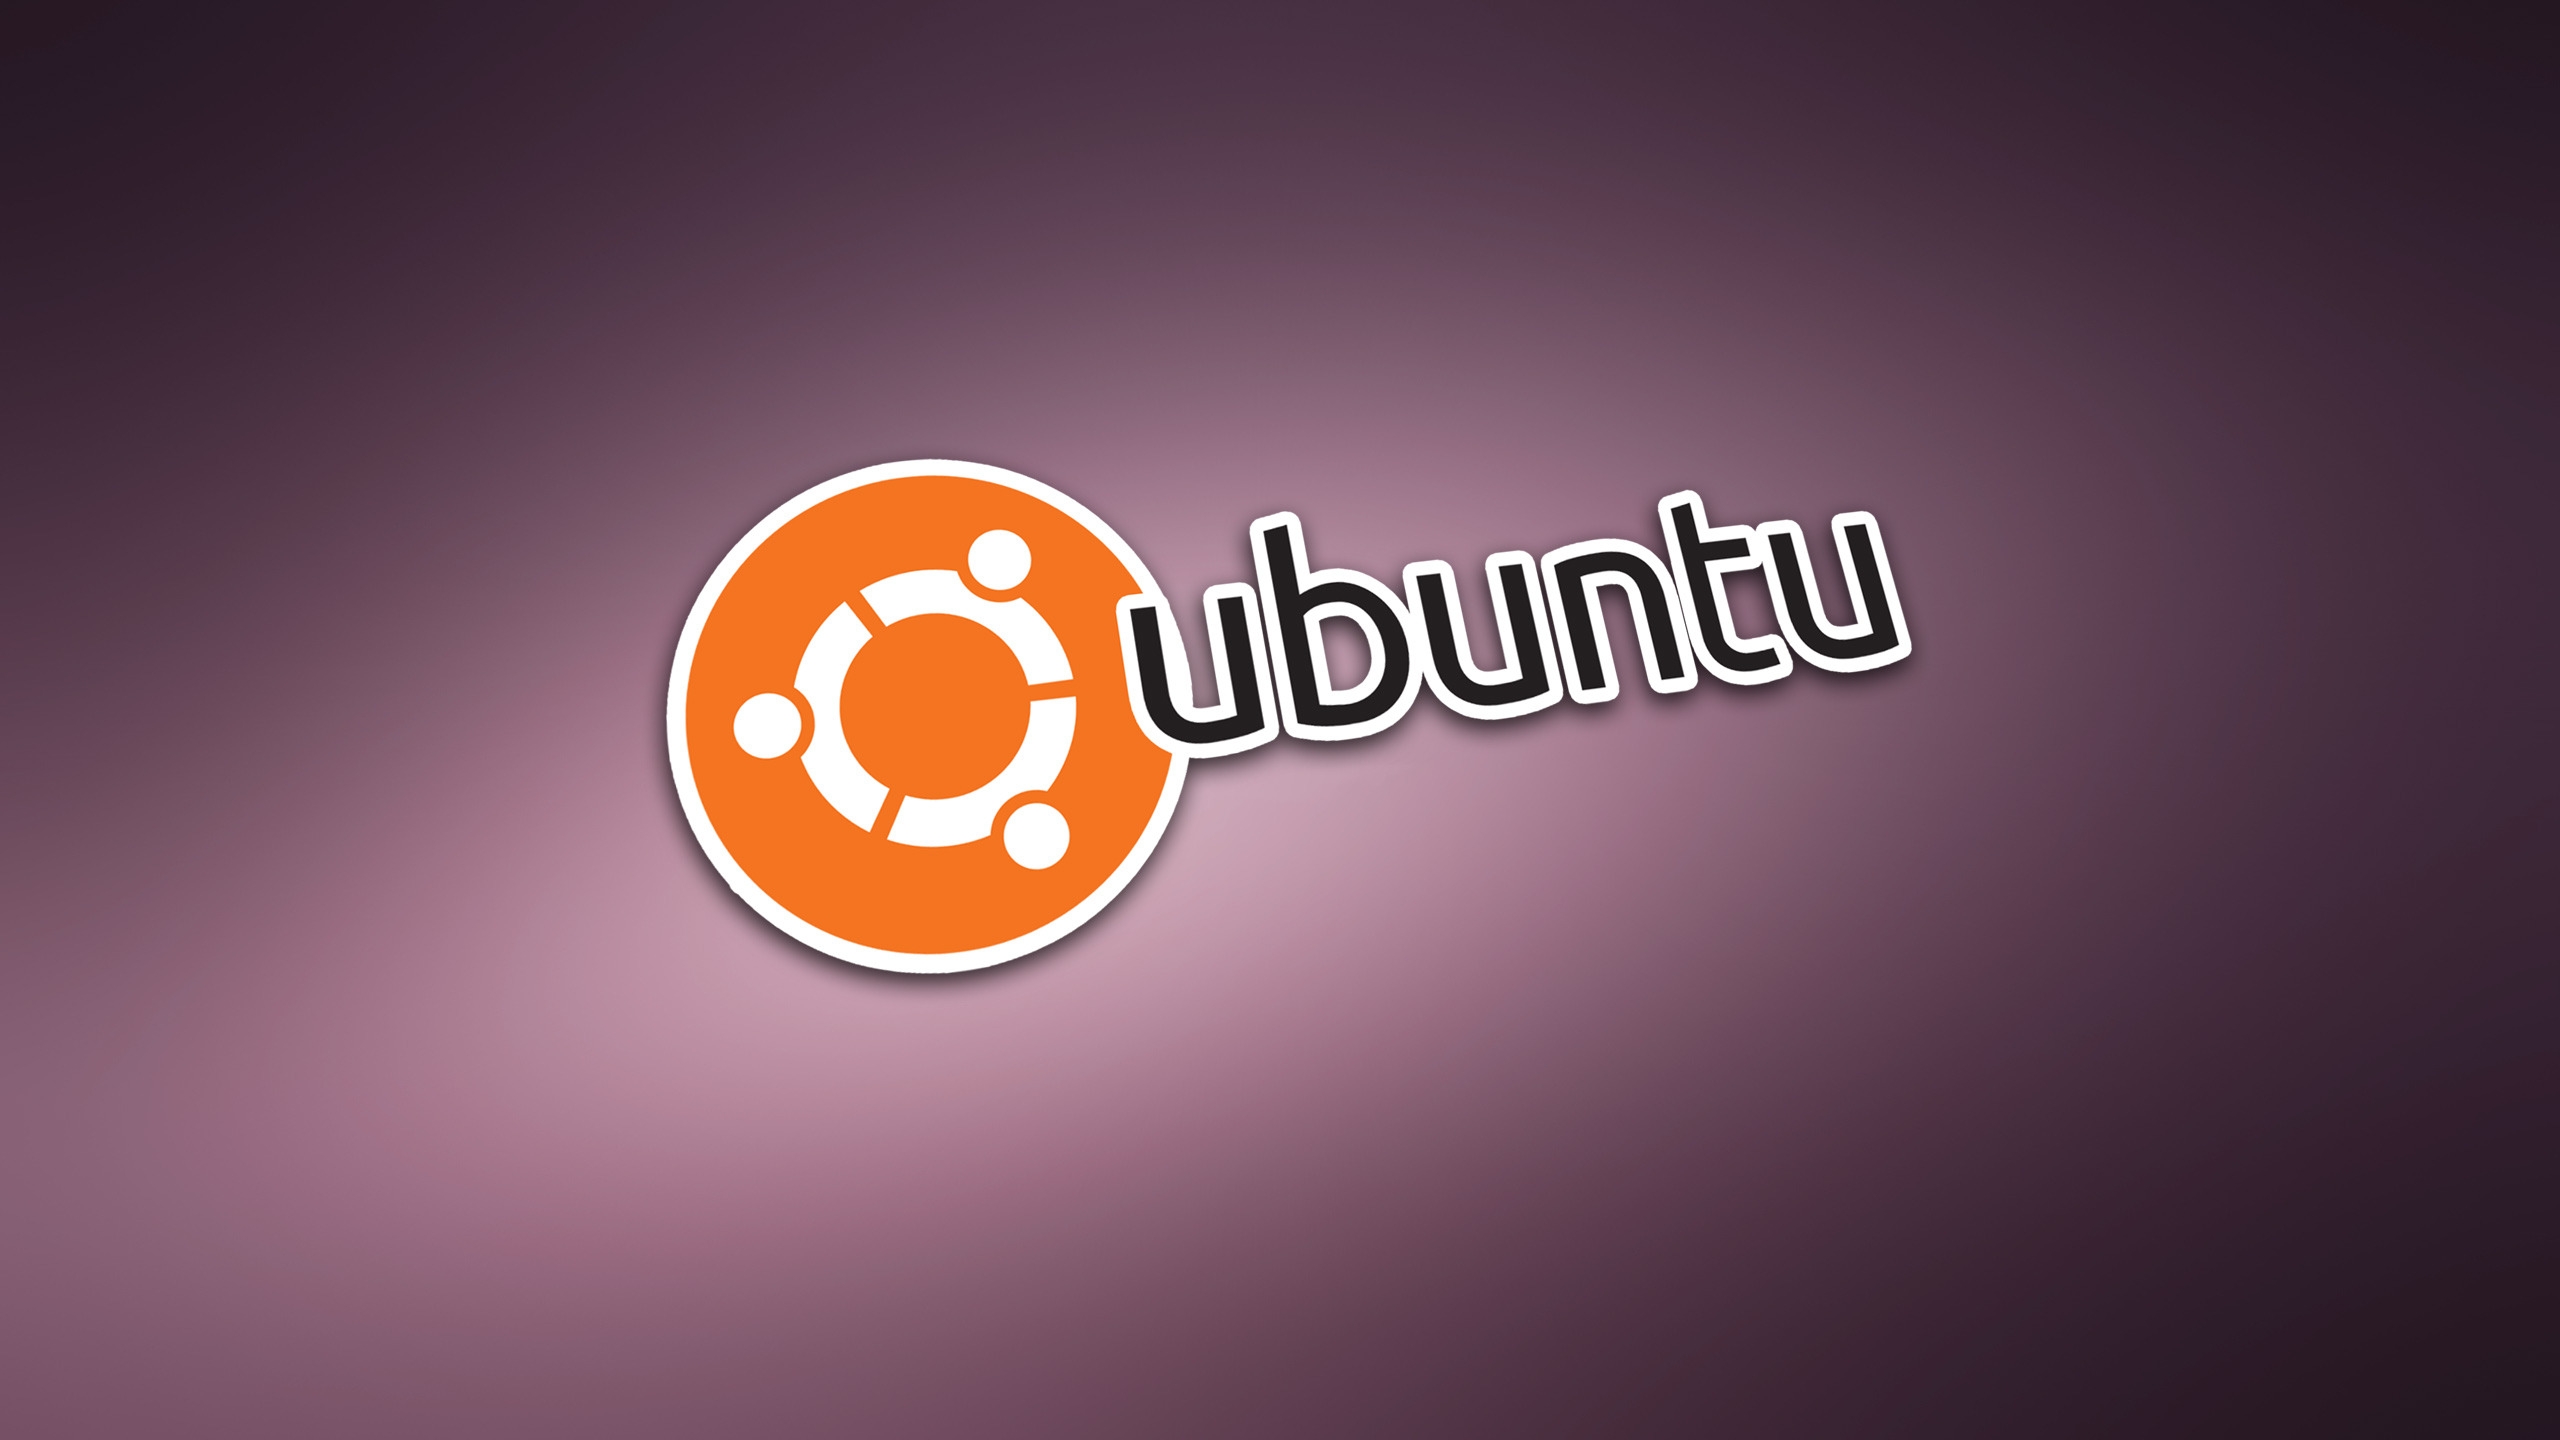 Ubuntu Modern Logo for 2560x1440 HDTV resolution